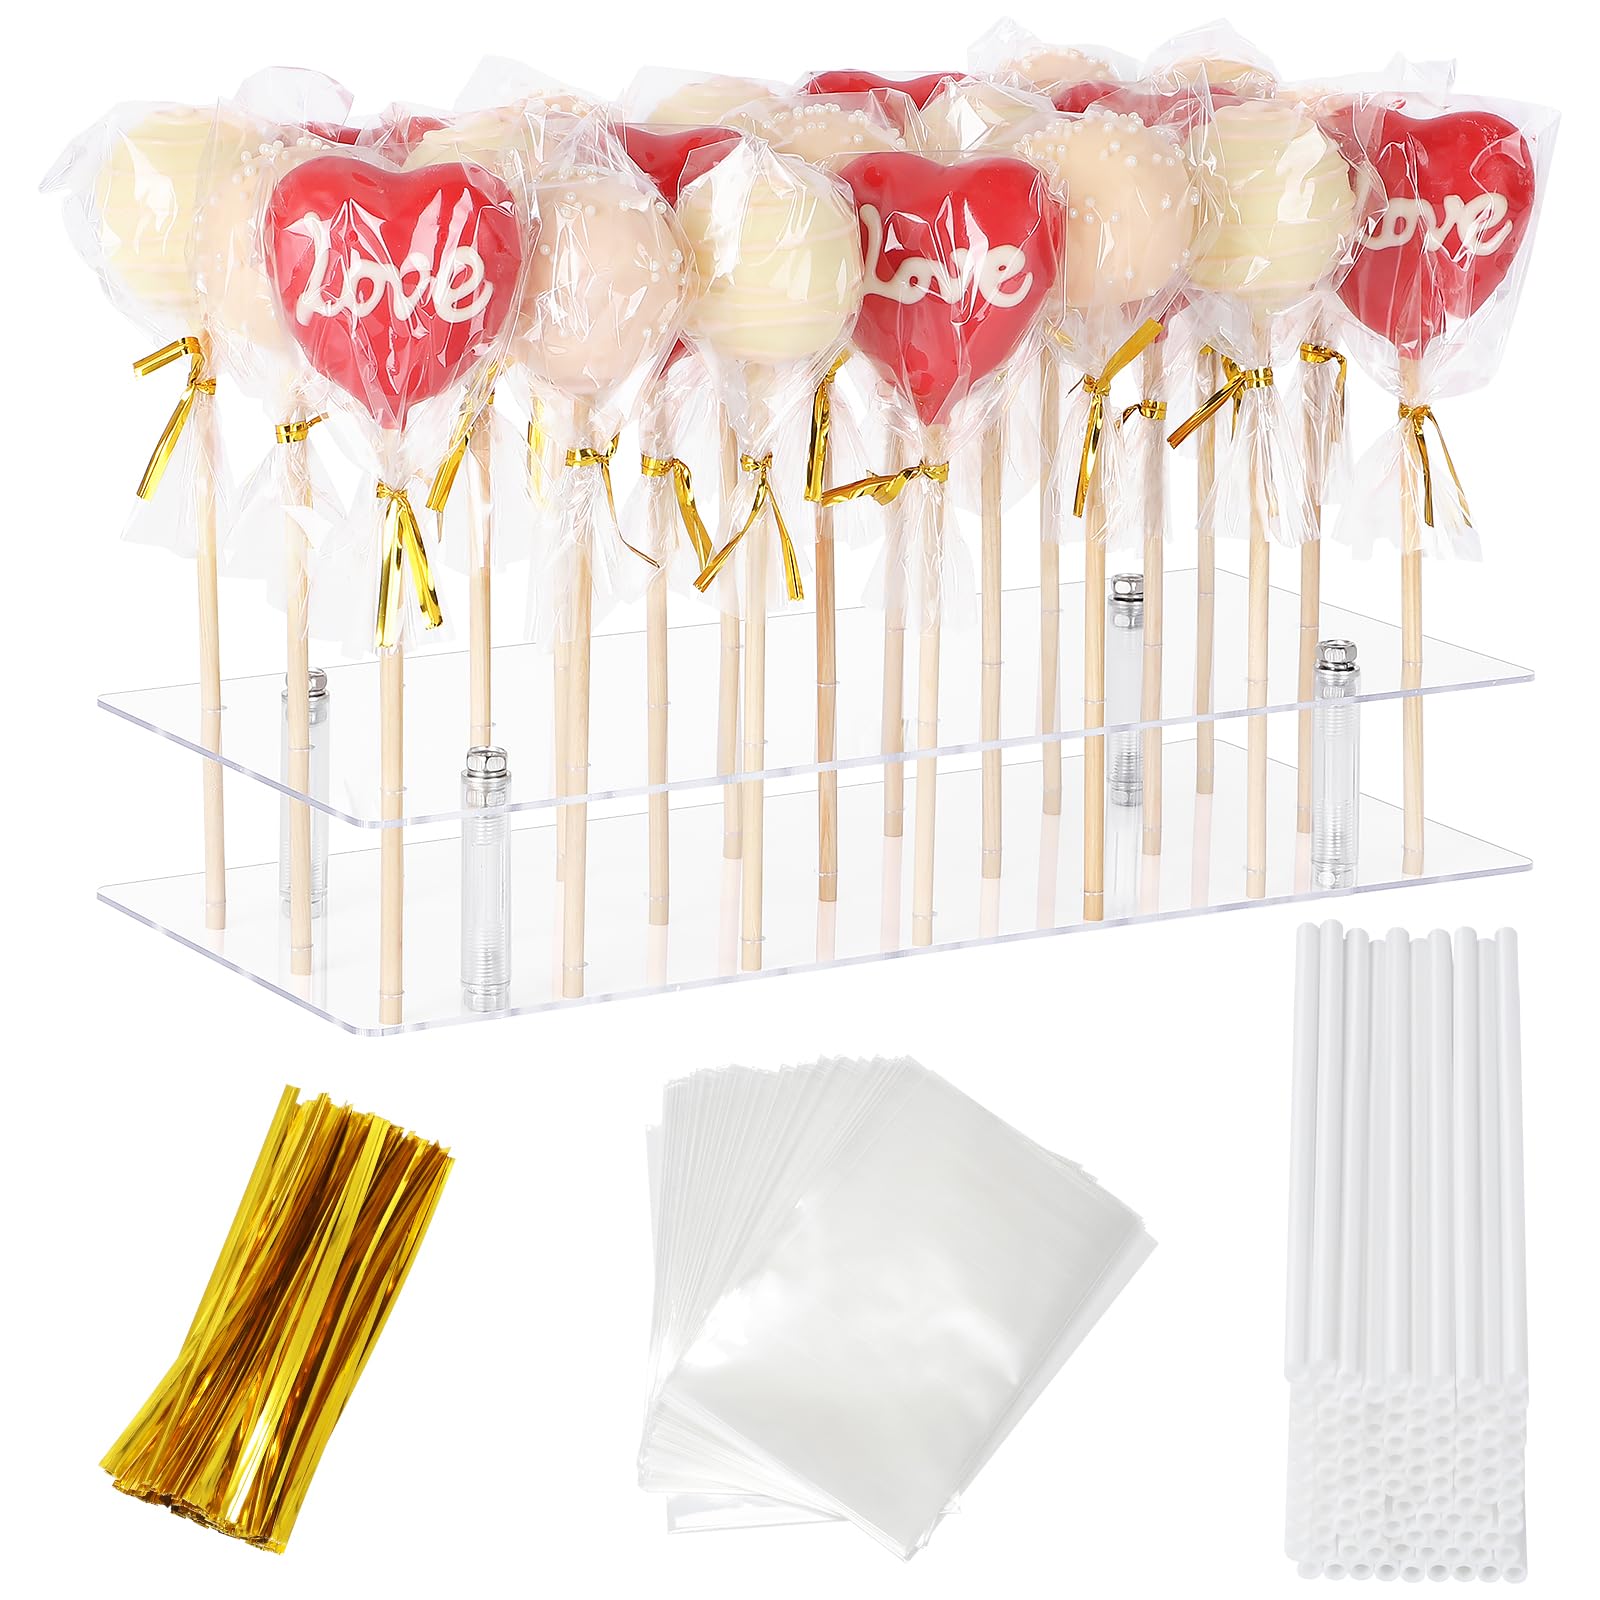 Cake Pop Stand with Sticks Kit, 21 Holes Lollipop Display Stand, Acrylic Cake Pop Display Holder, Lollipop Holder with 100 Pcs Sticks, 100 Pcs Clear Wrappers, 100 Pcs Gold Twist Ties